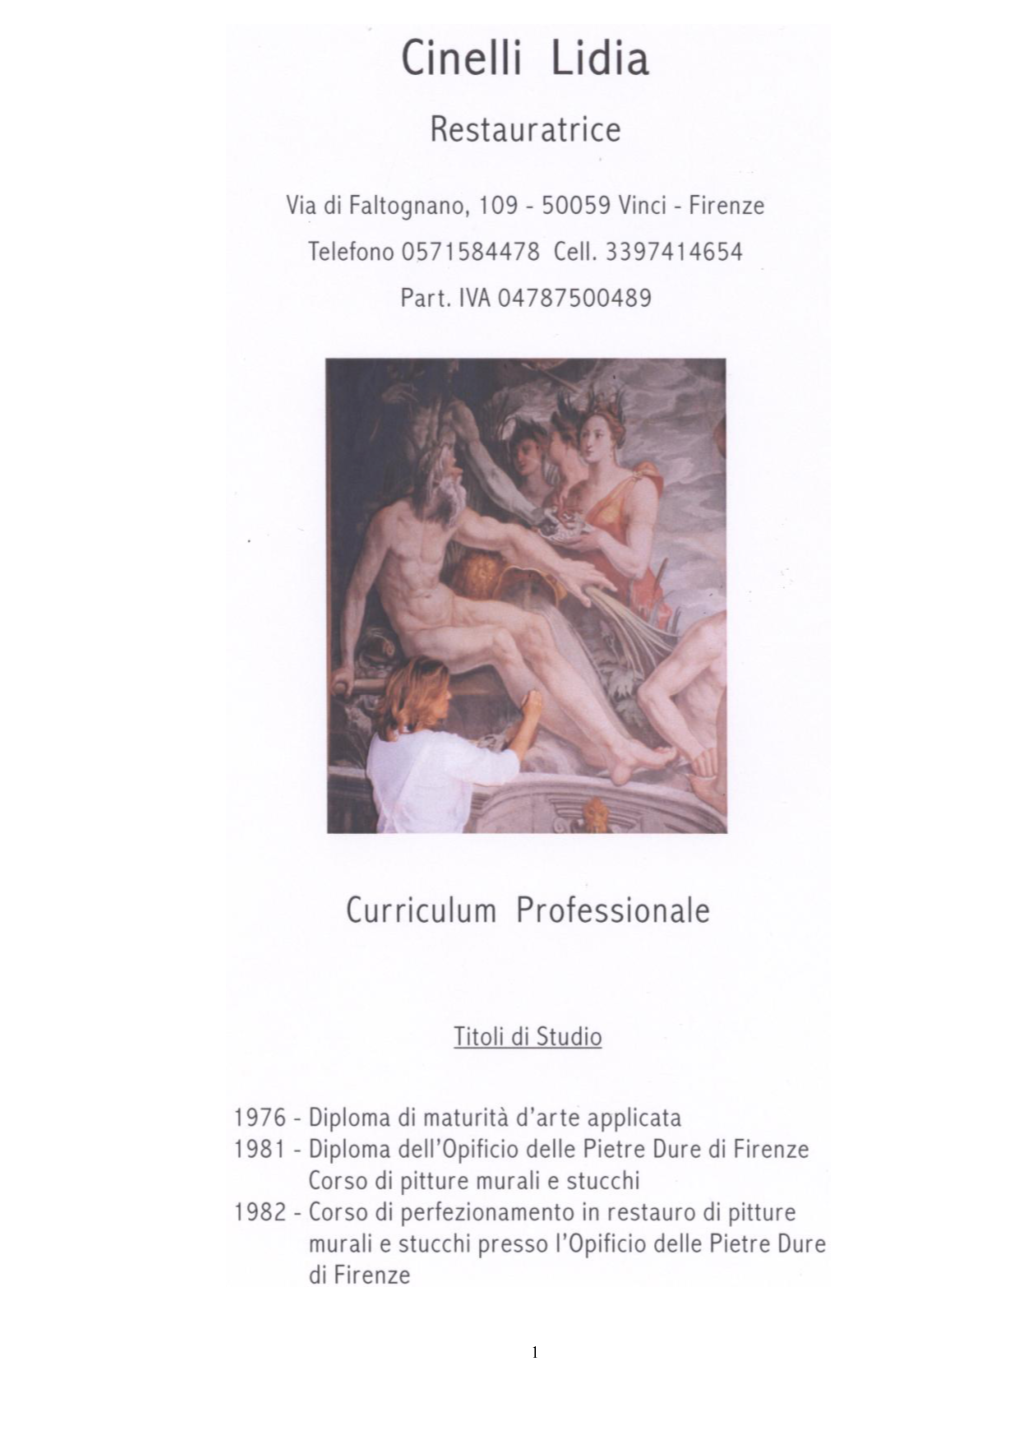 Curriculum Professionale Di Lidia Cinelli